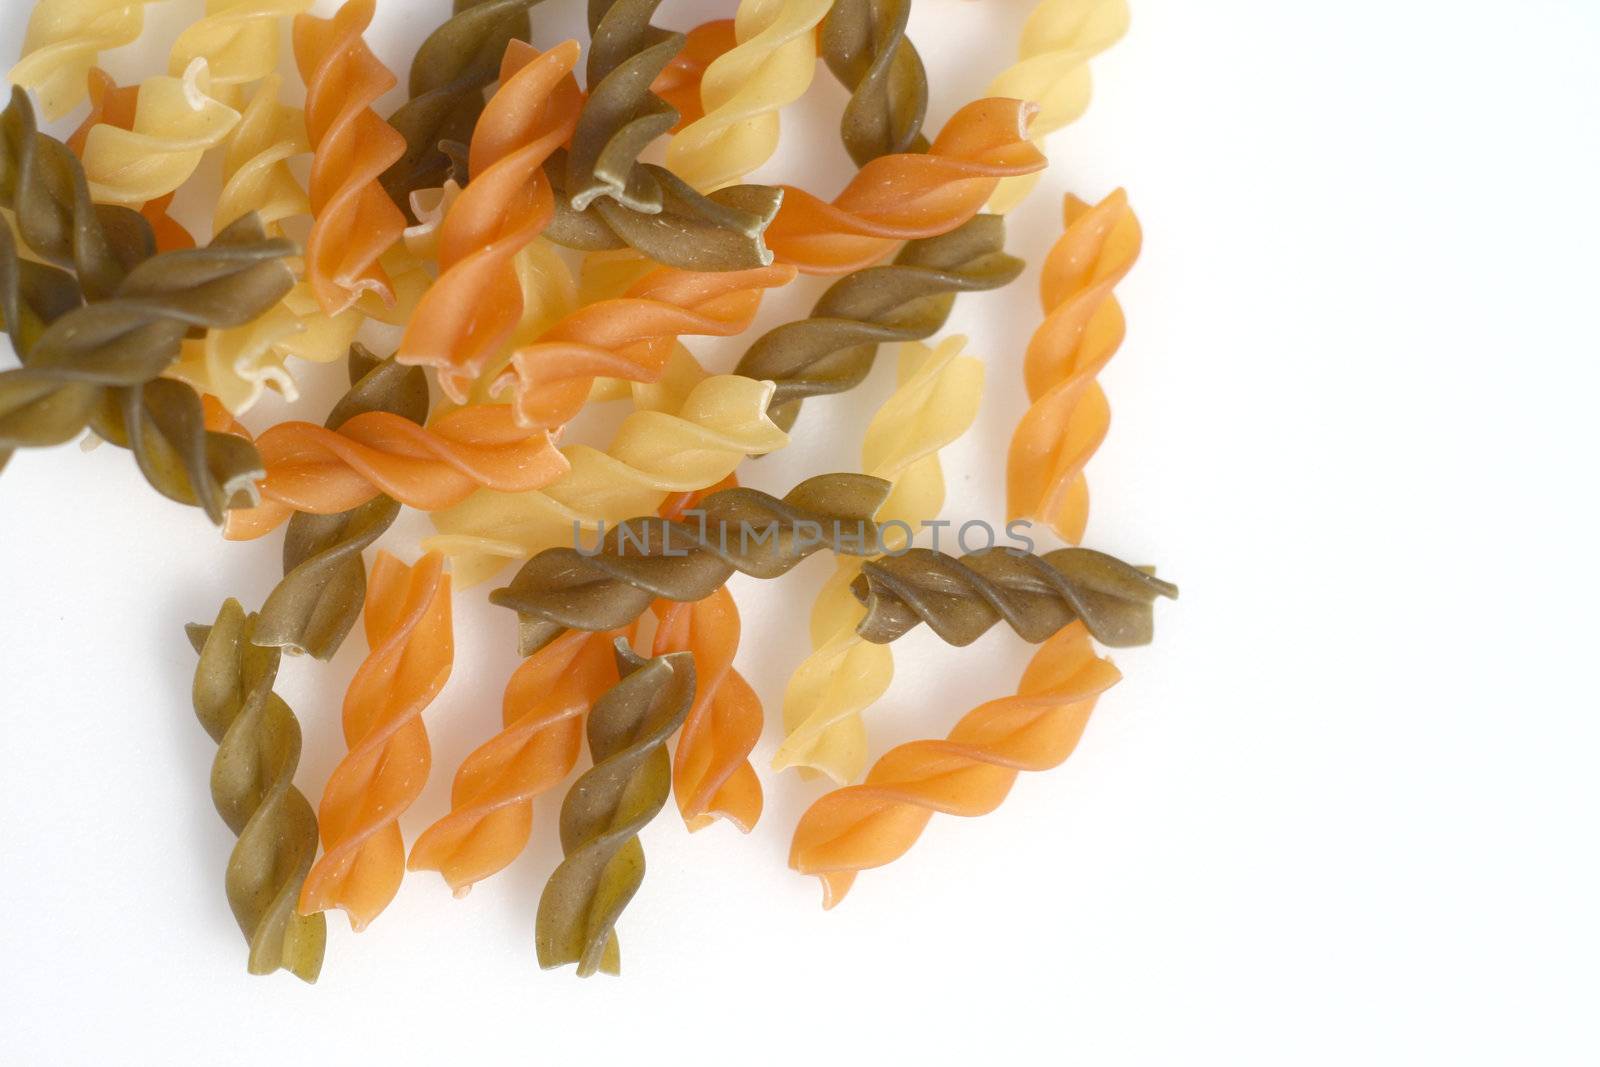 coloured pasta spirals over a light background